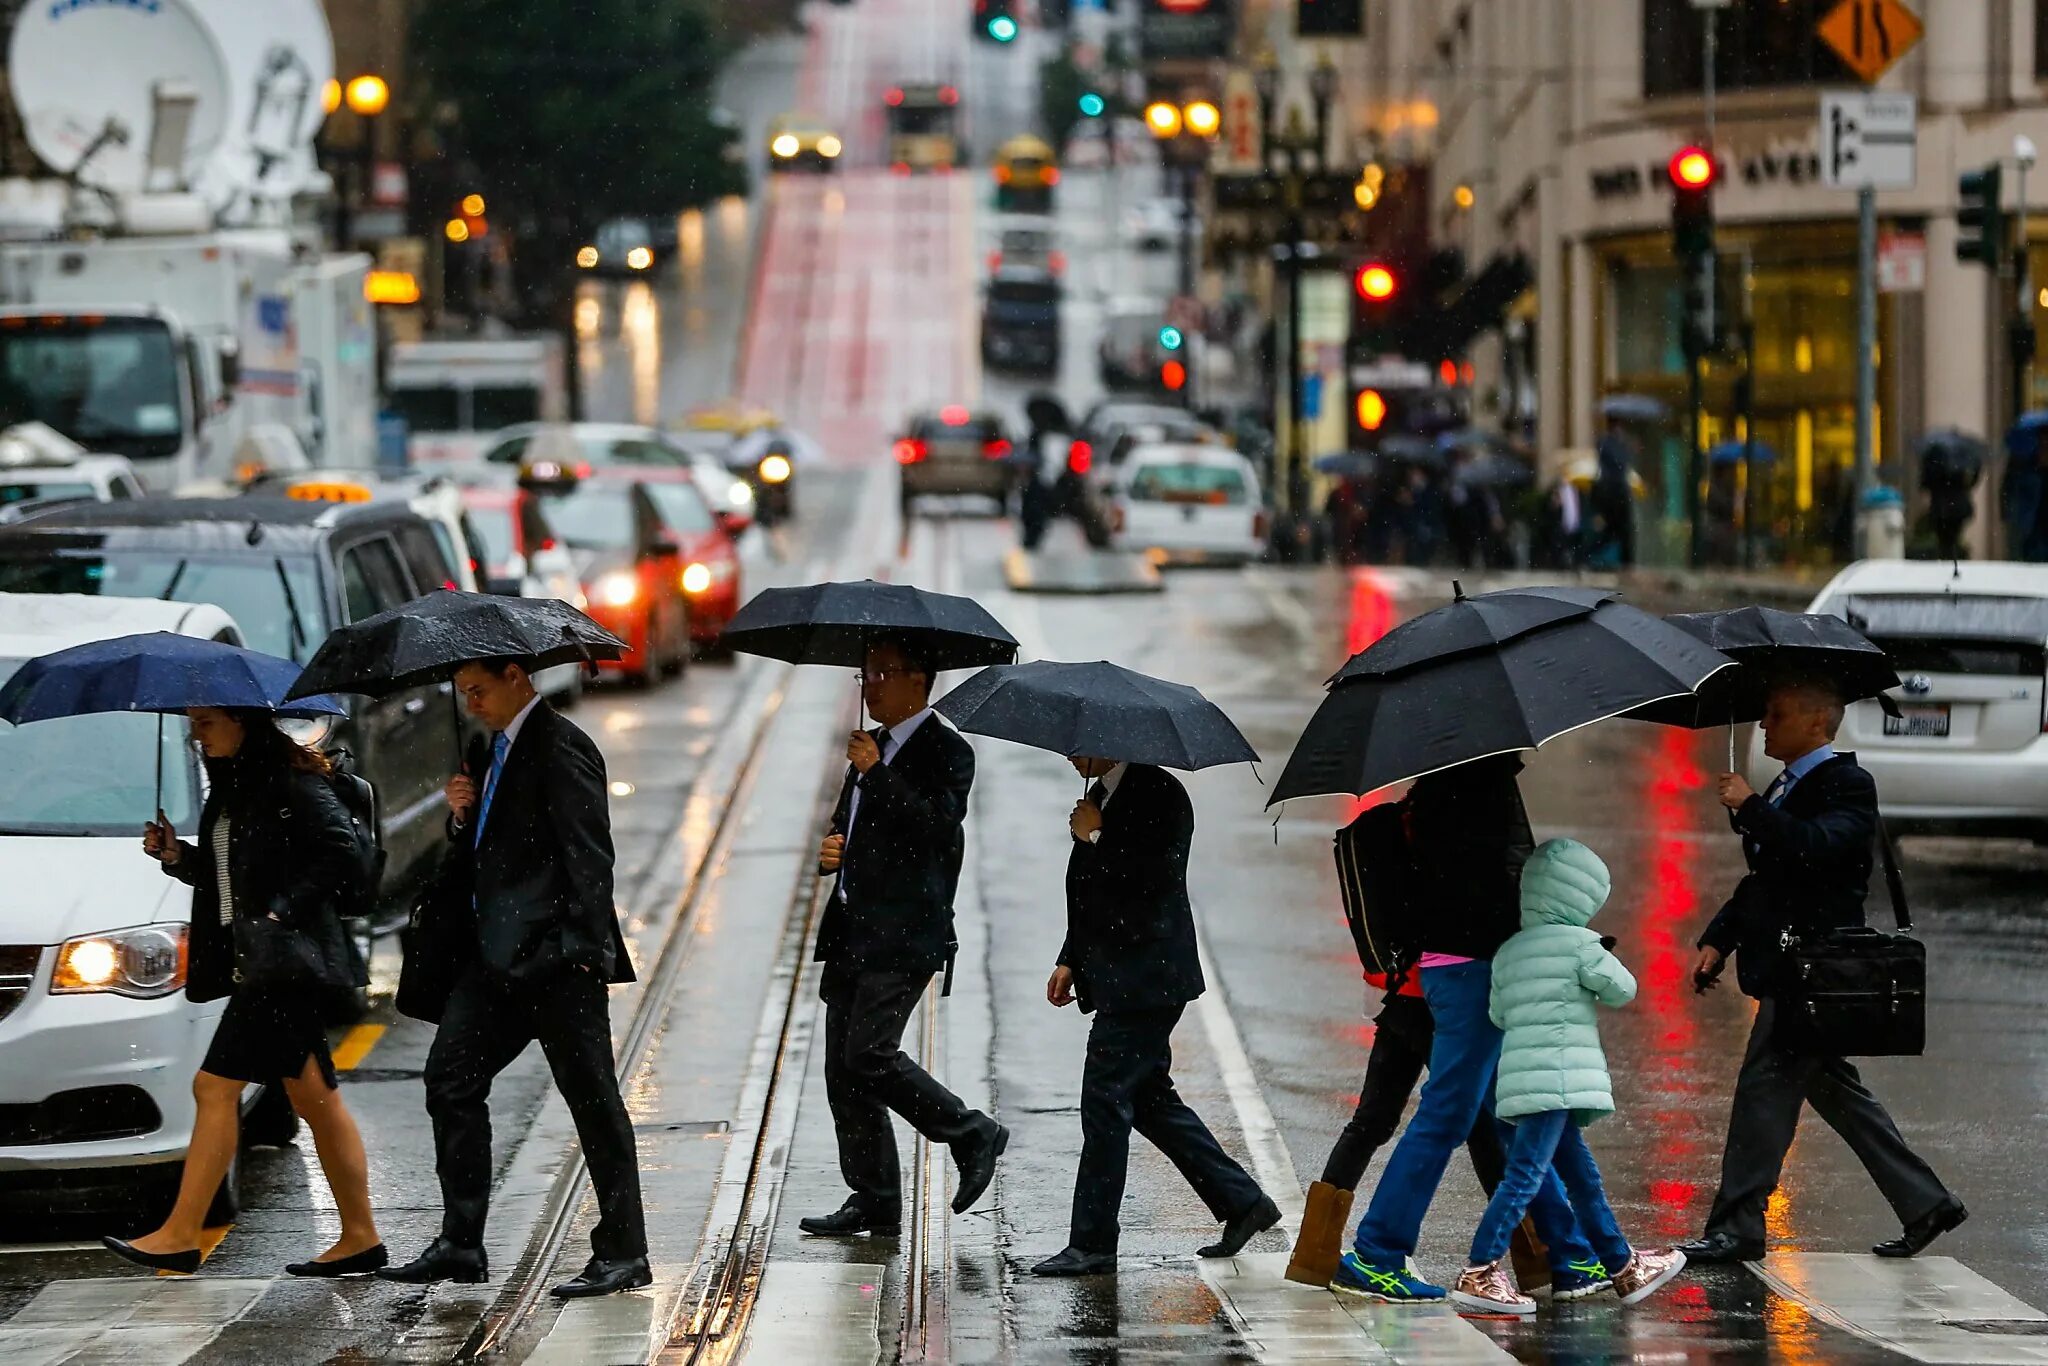 You take an umbrella today. Сан Франциско дождь. Rainy weather. People Crossing Street. Плохая погода в Сан Франциско.